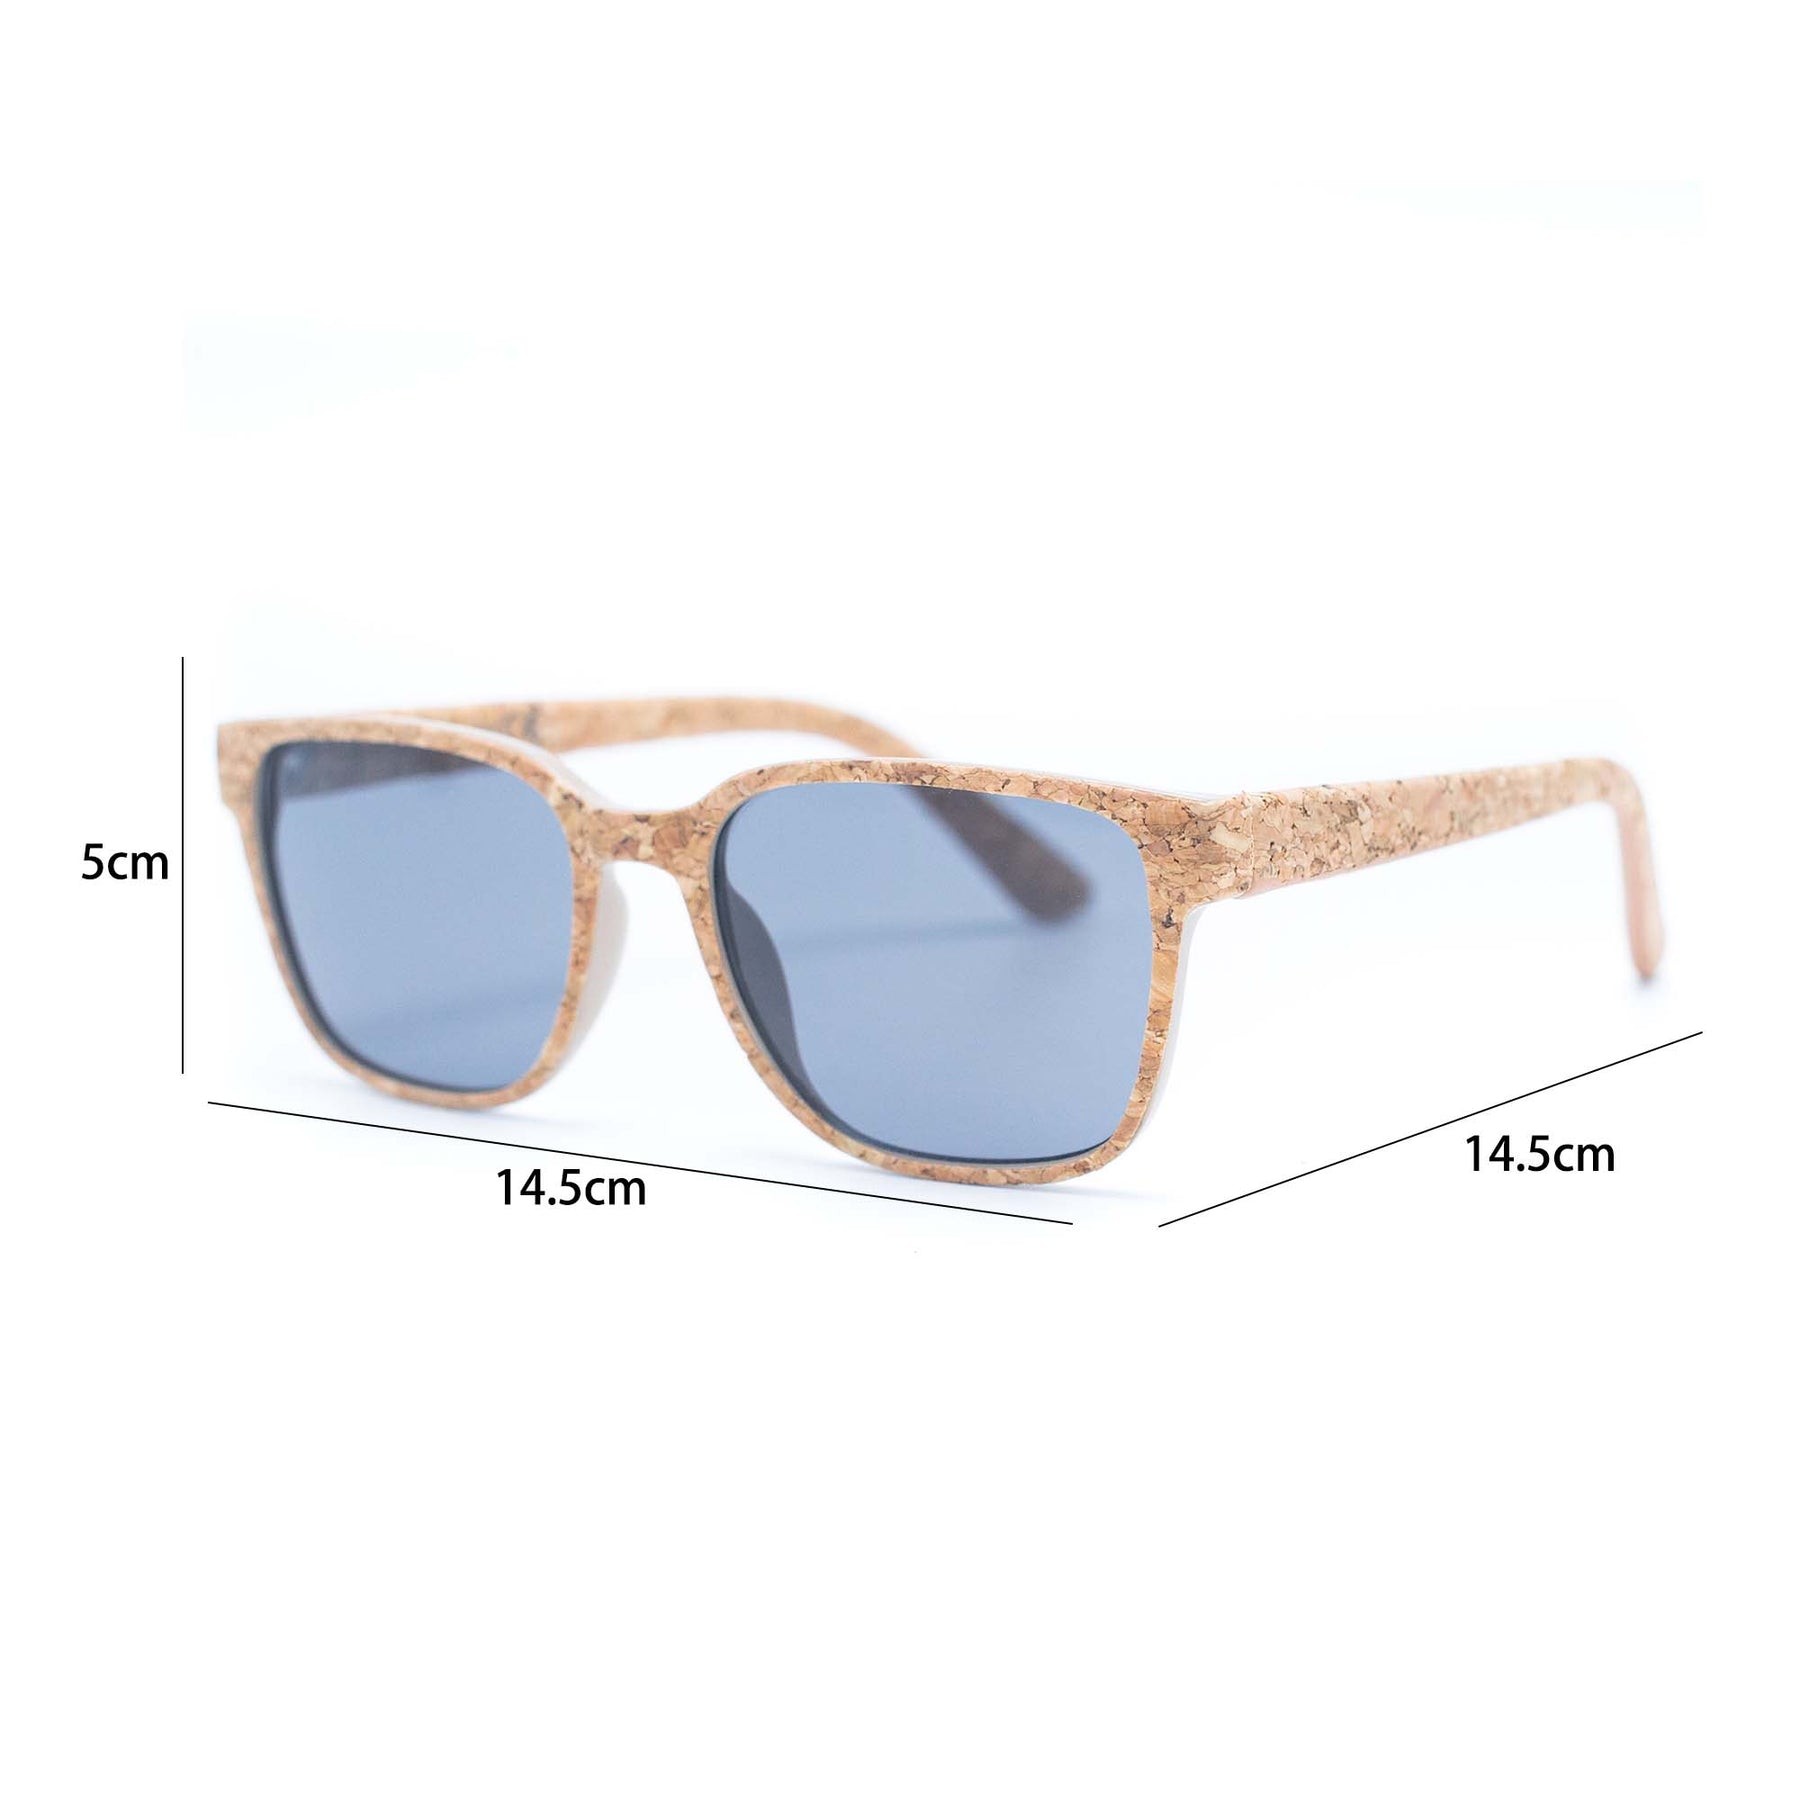 Cork UV protection men eyewear sunglasses(Including case) L-857